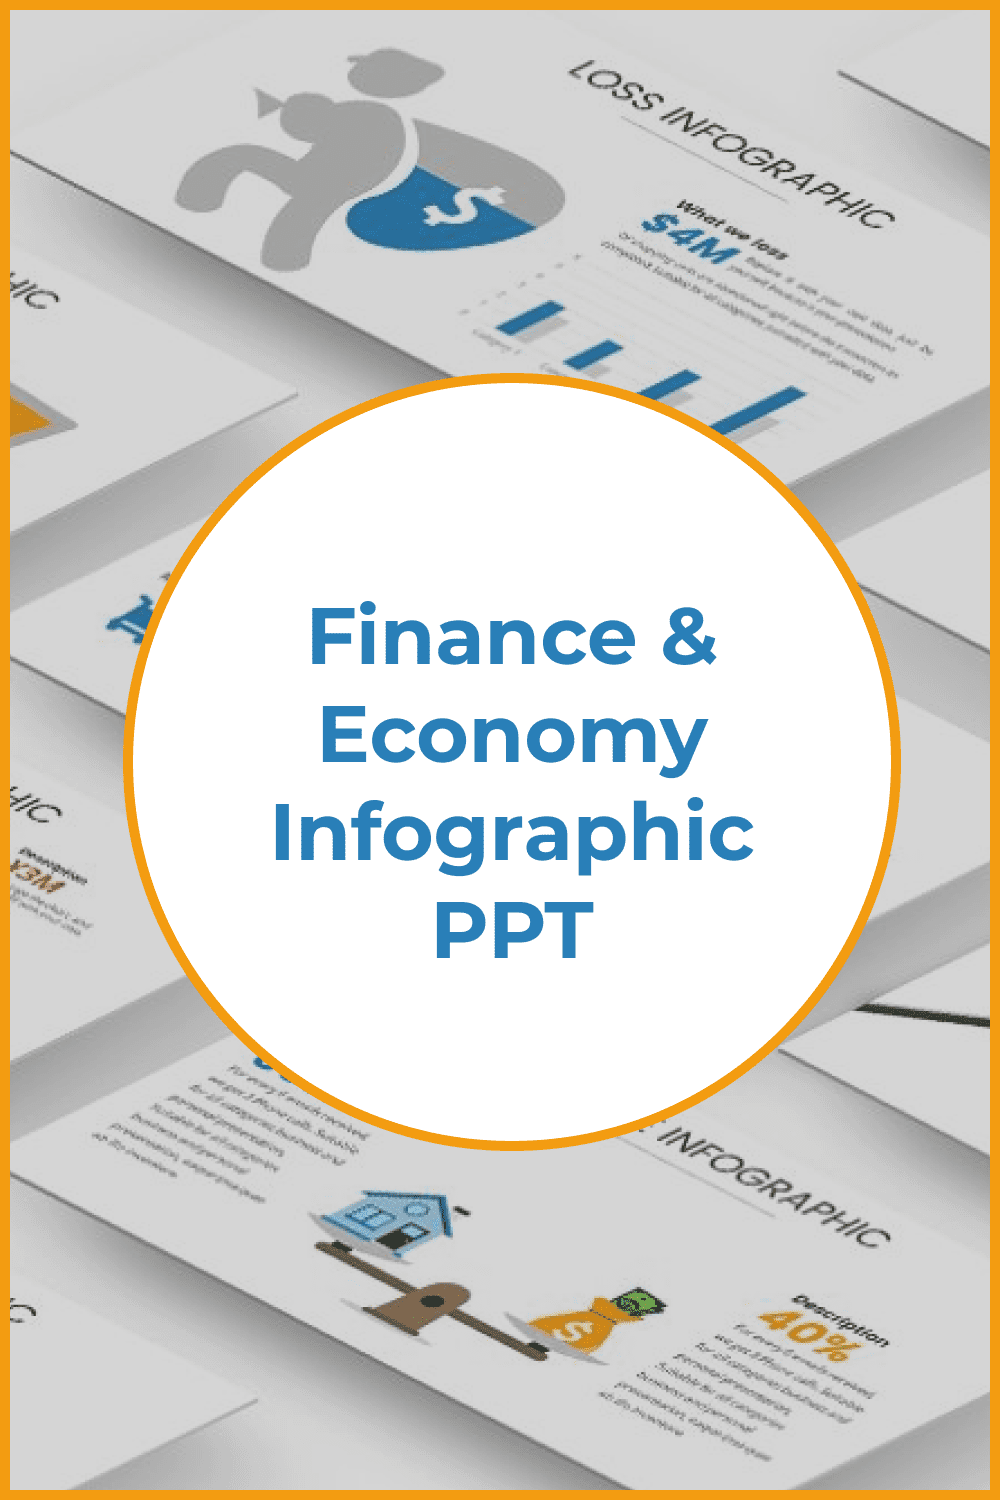 Finance & Economy Infographic PPT Pinterest.